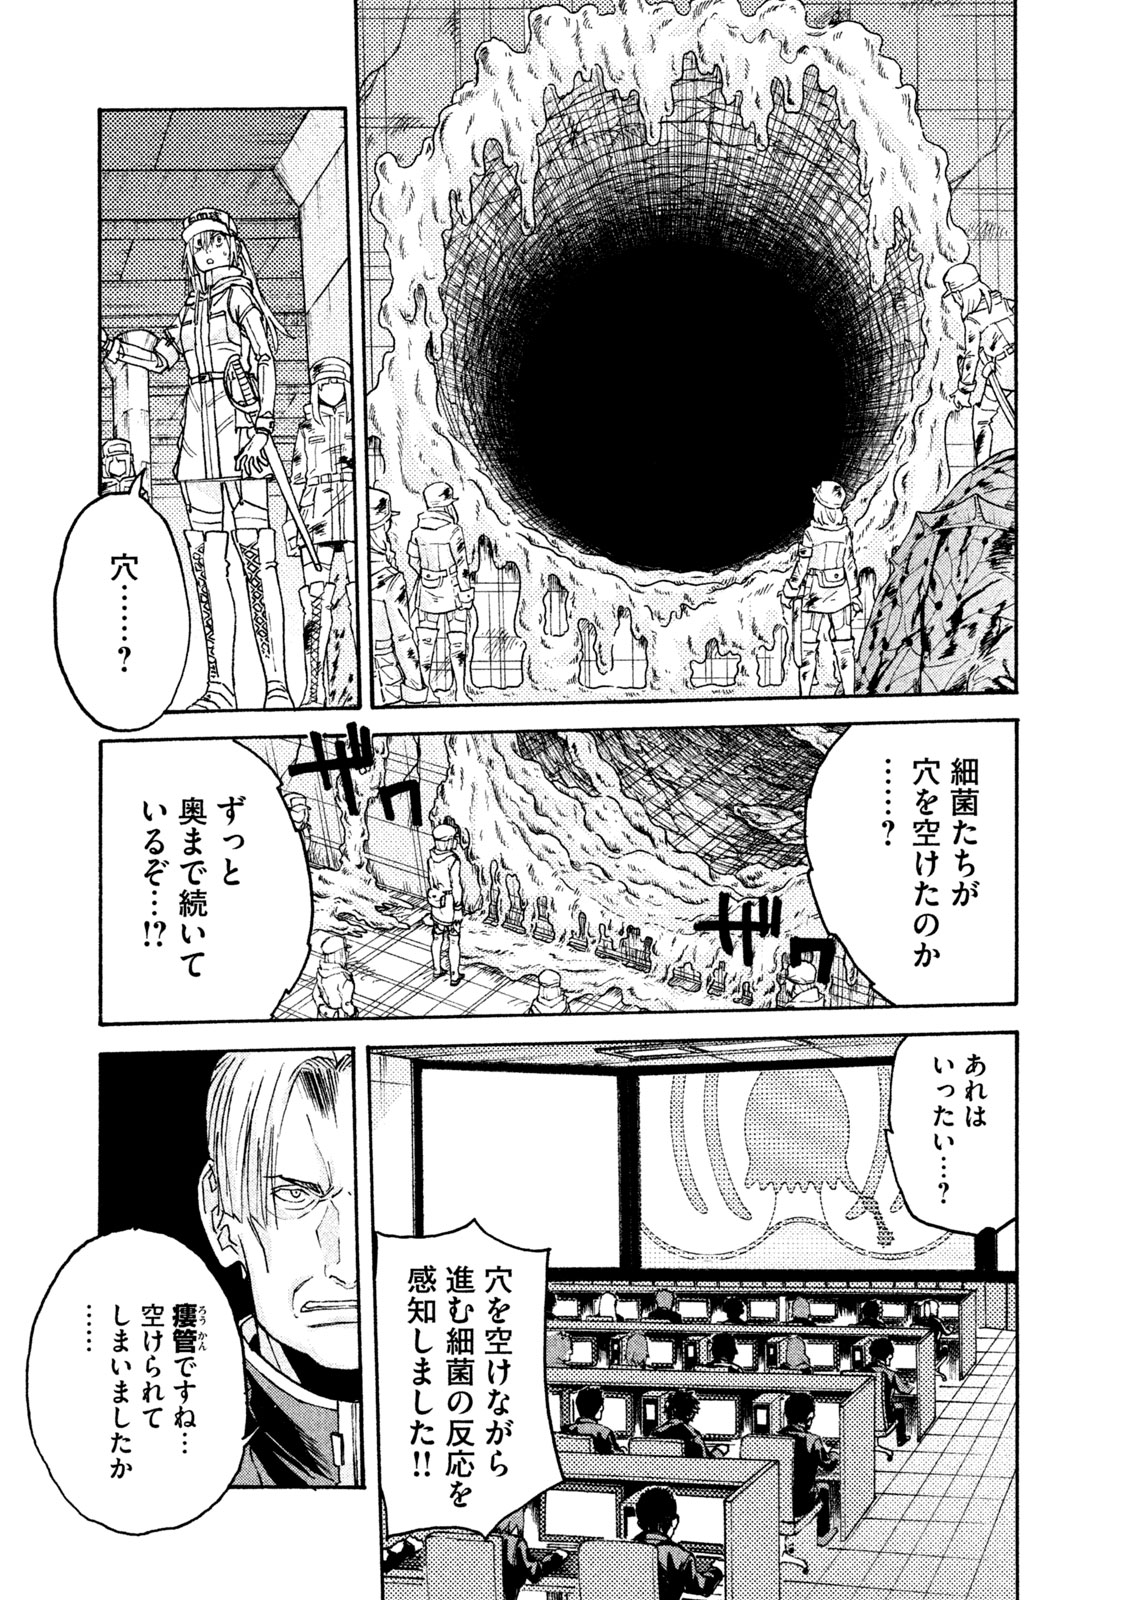 Hataraku Saibou BLACK - Chapter 21 - Page 19